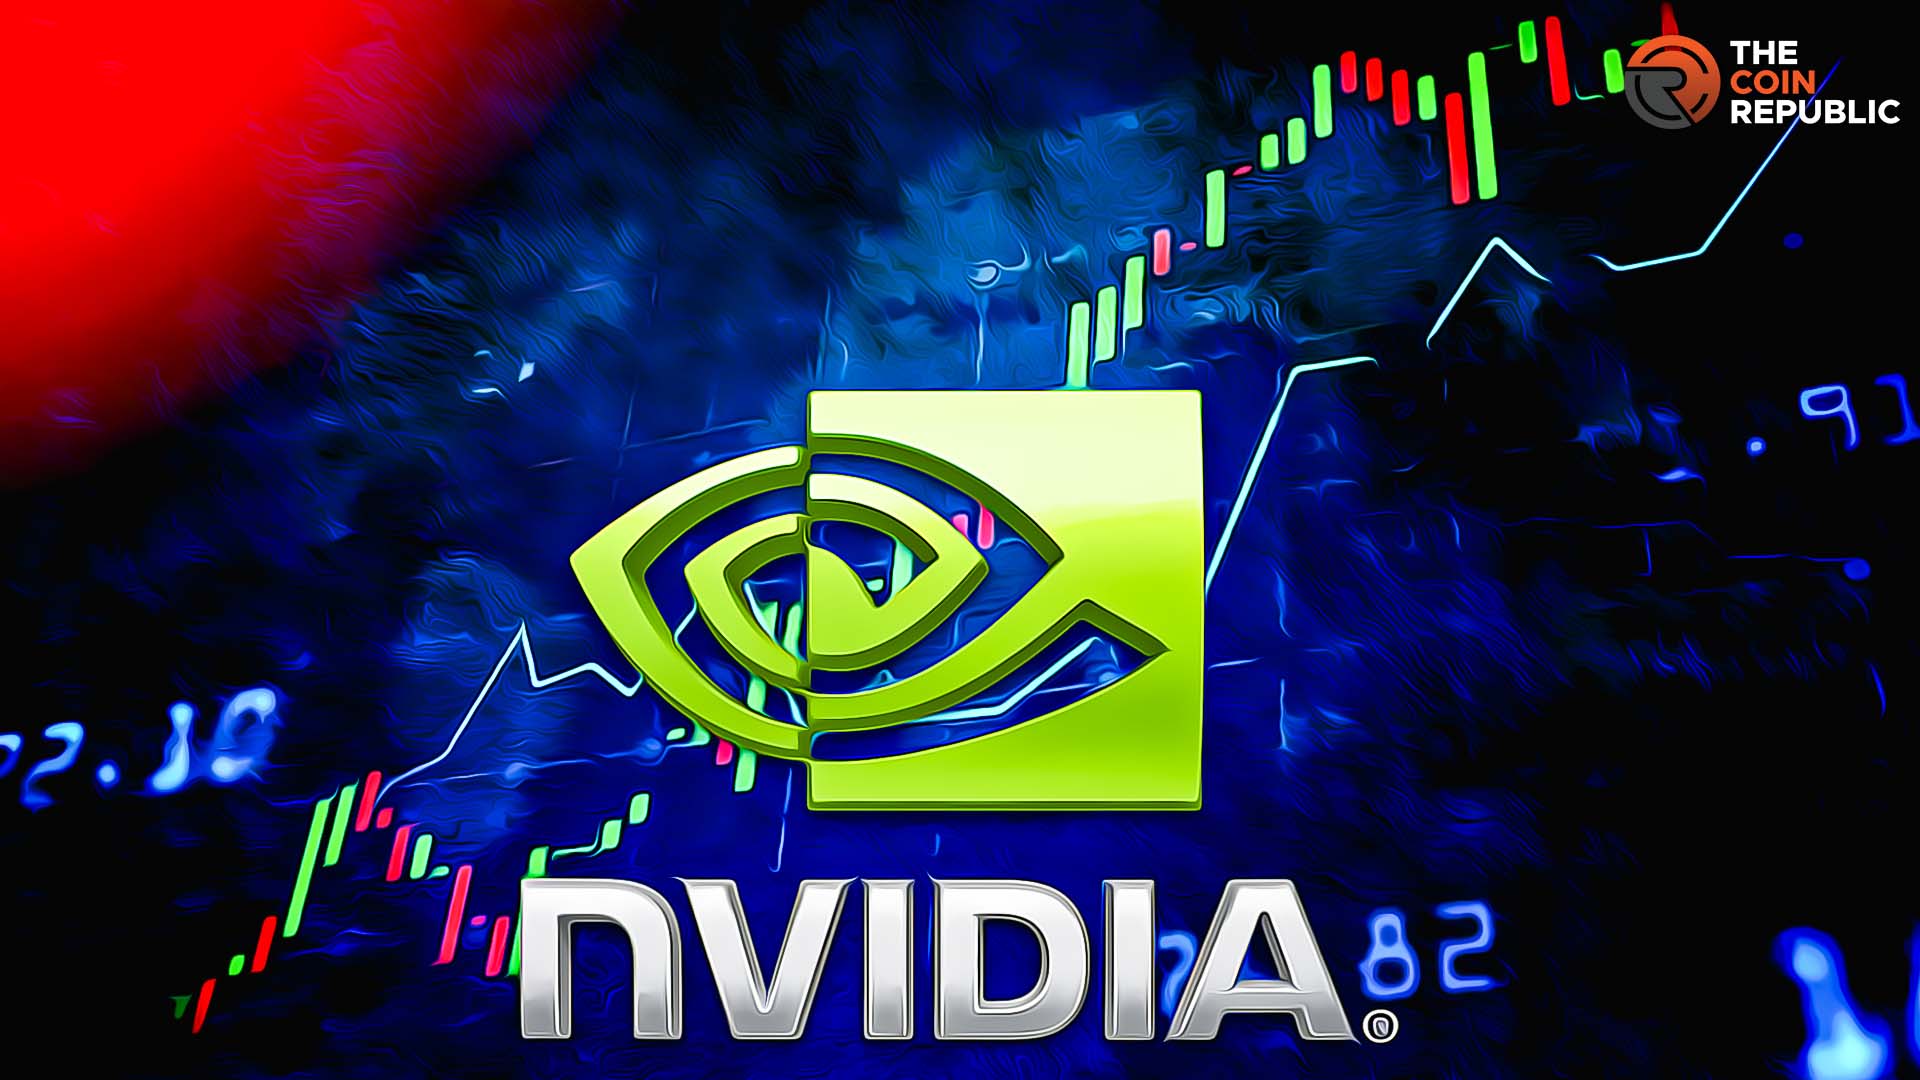 Nvidia Corp. (NVDA Stock) – Q1 Earnings on May 24, Implications?